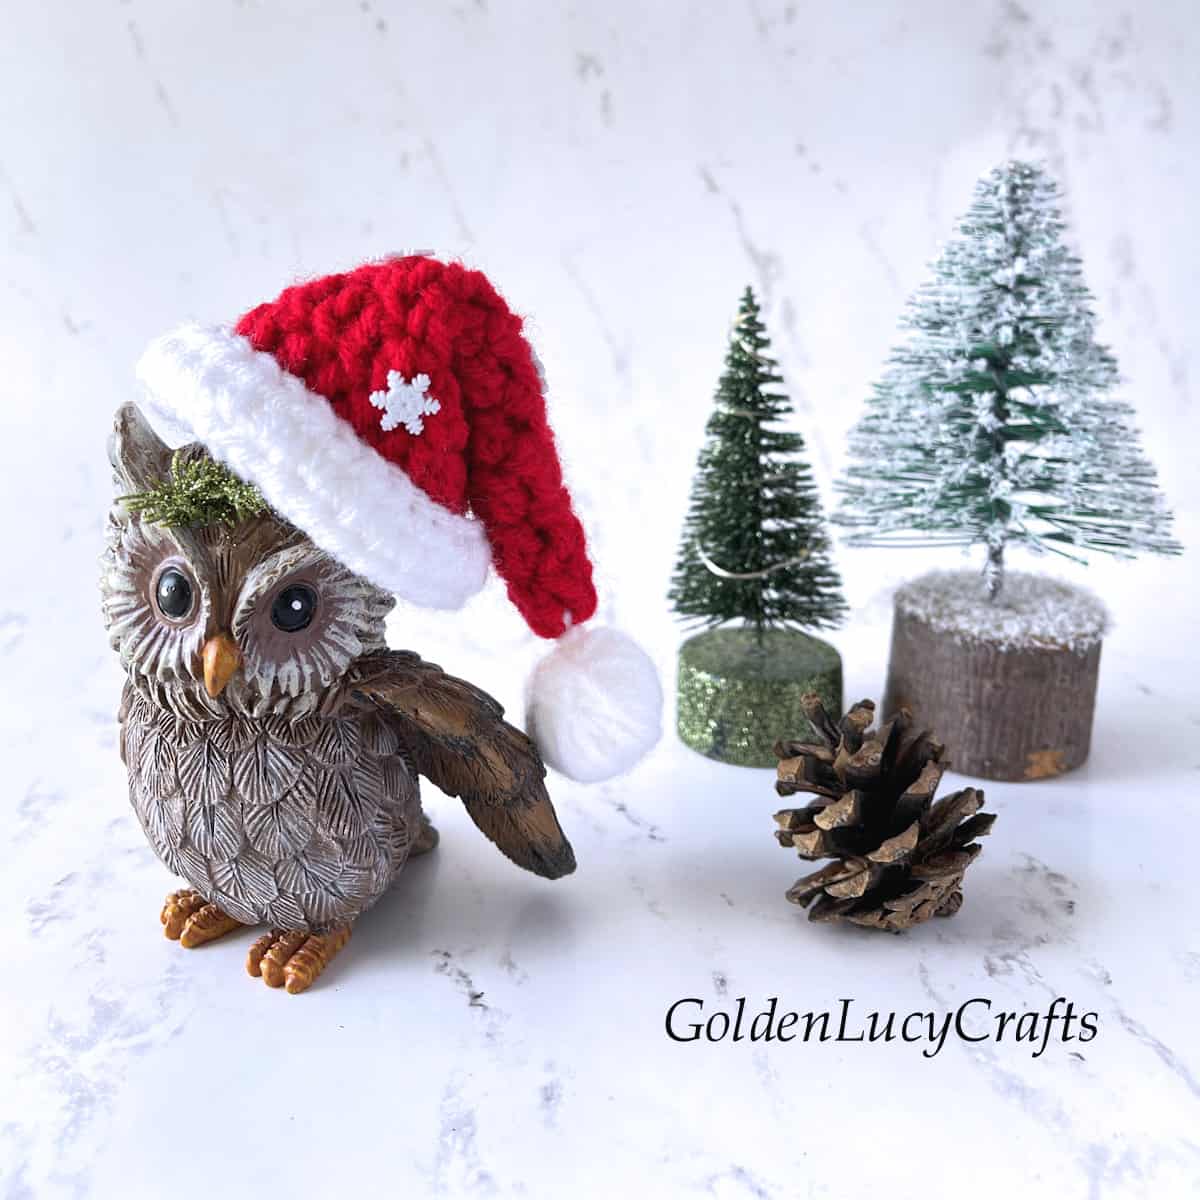 Small owl in crocheted Santa hat.